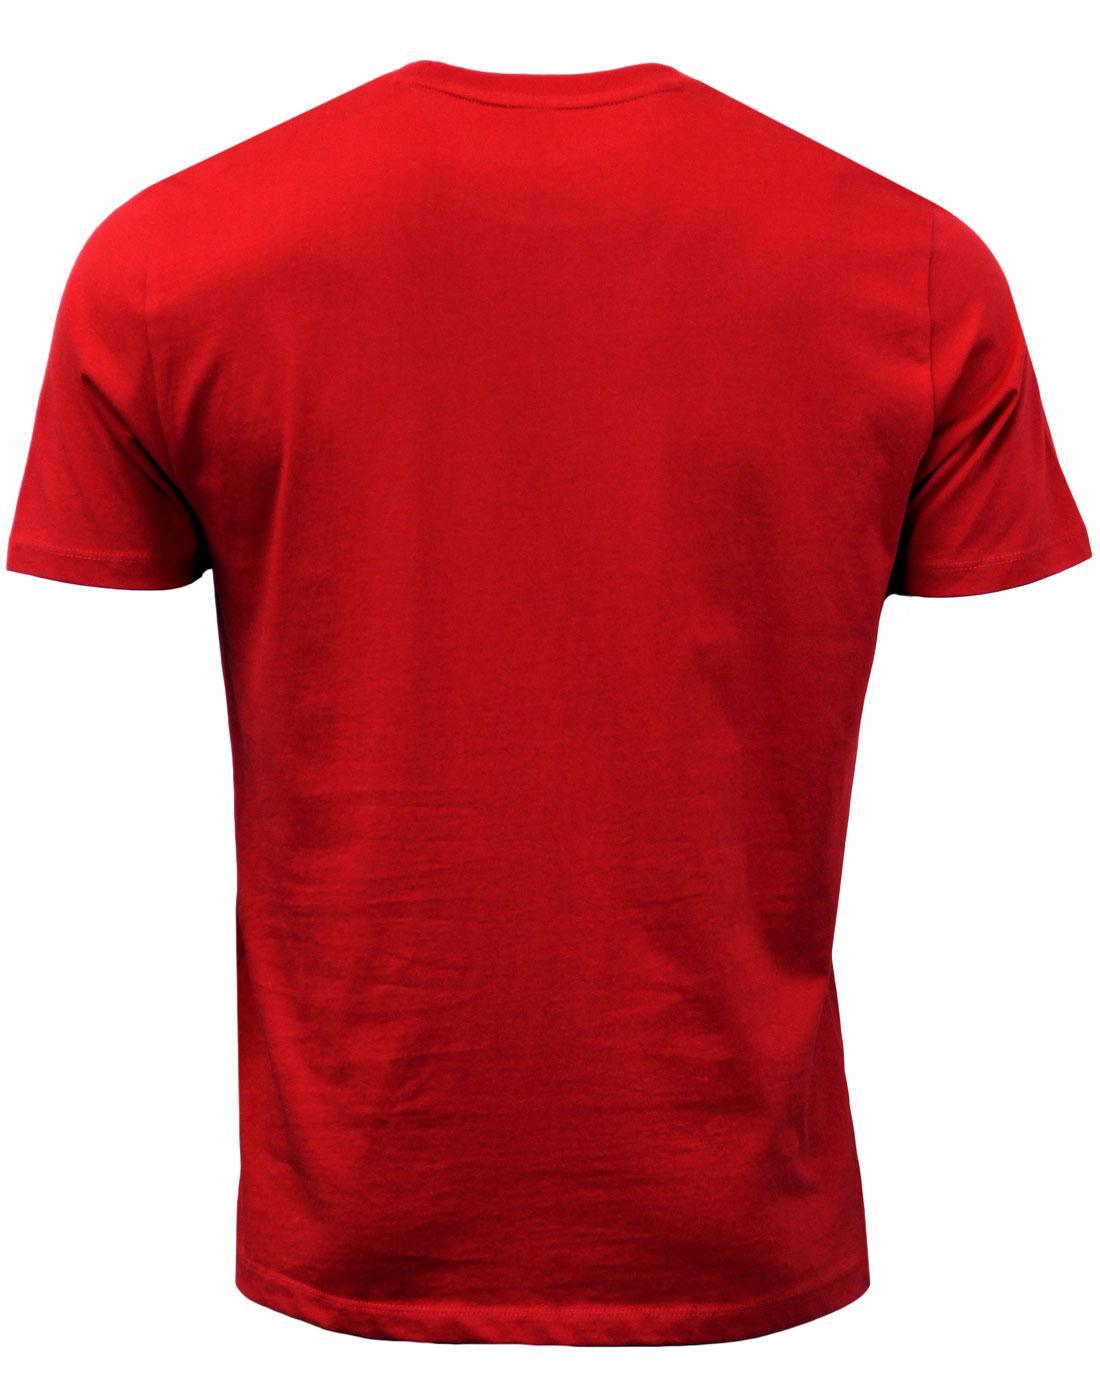 BEN SHERMAN Keith Moon Retro 1960s Mod Target T-Shirt in Red